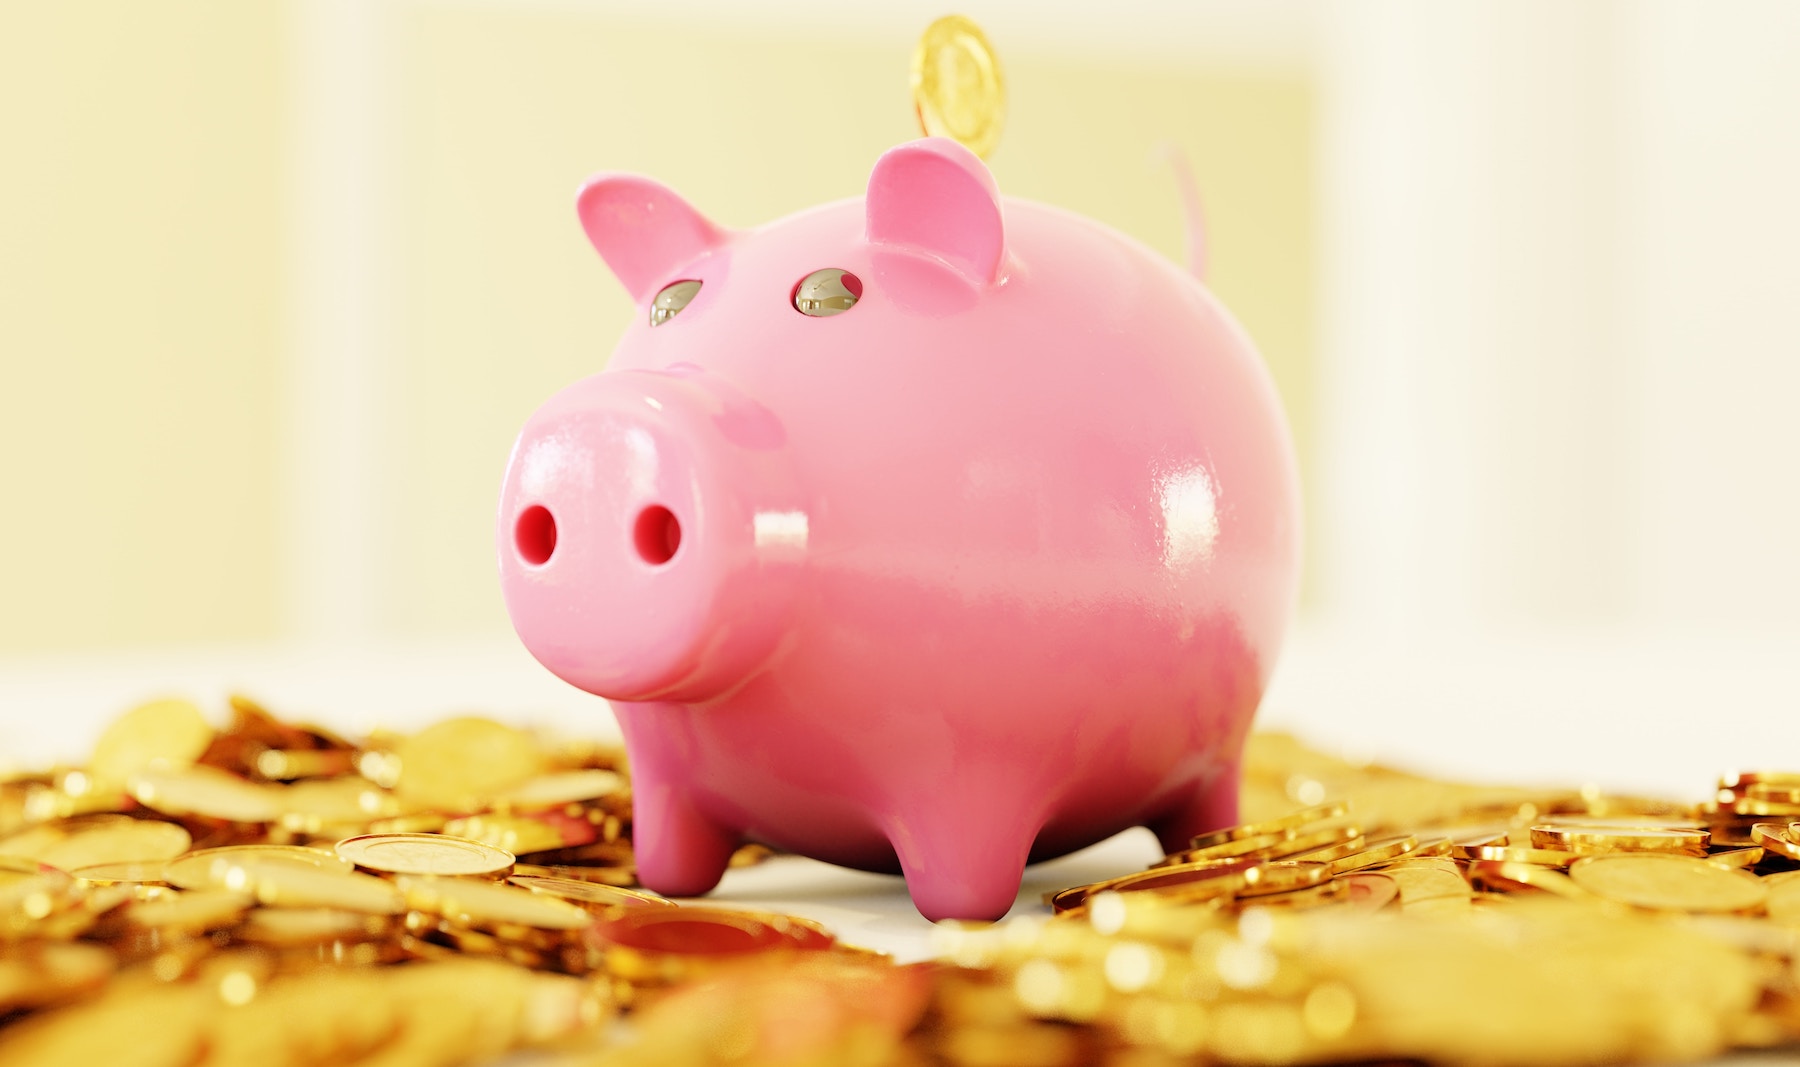 A piggy bank with an abundance of coins around it, teaching kids that money is abundant.